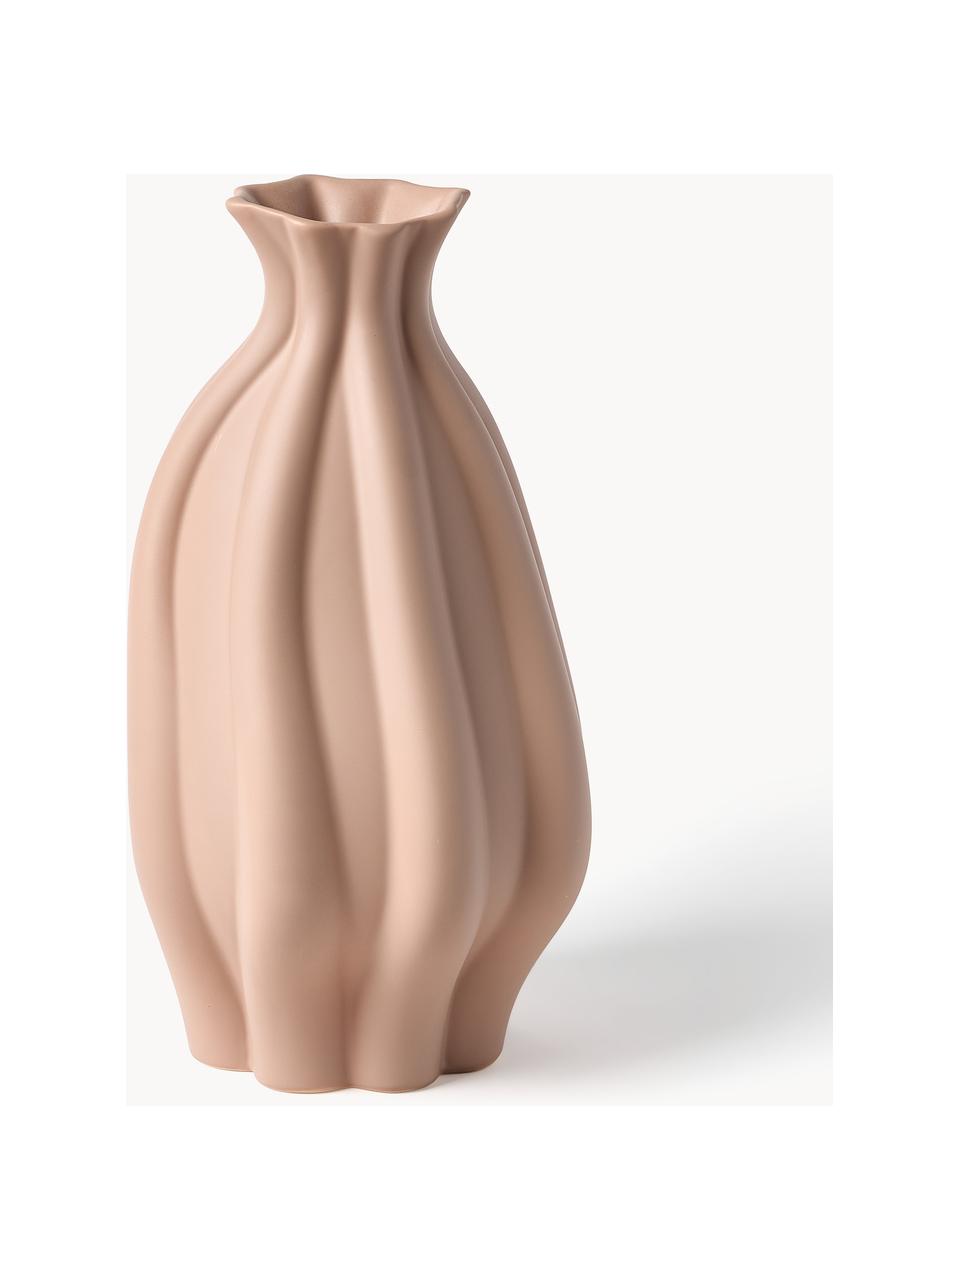 Vase Blom aus Keramik, H 33 cm, Keramik, Peach, B 19 x H 33 cm